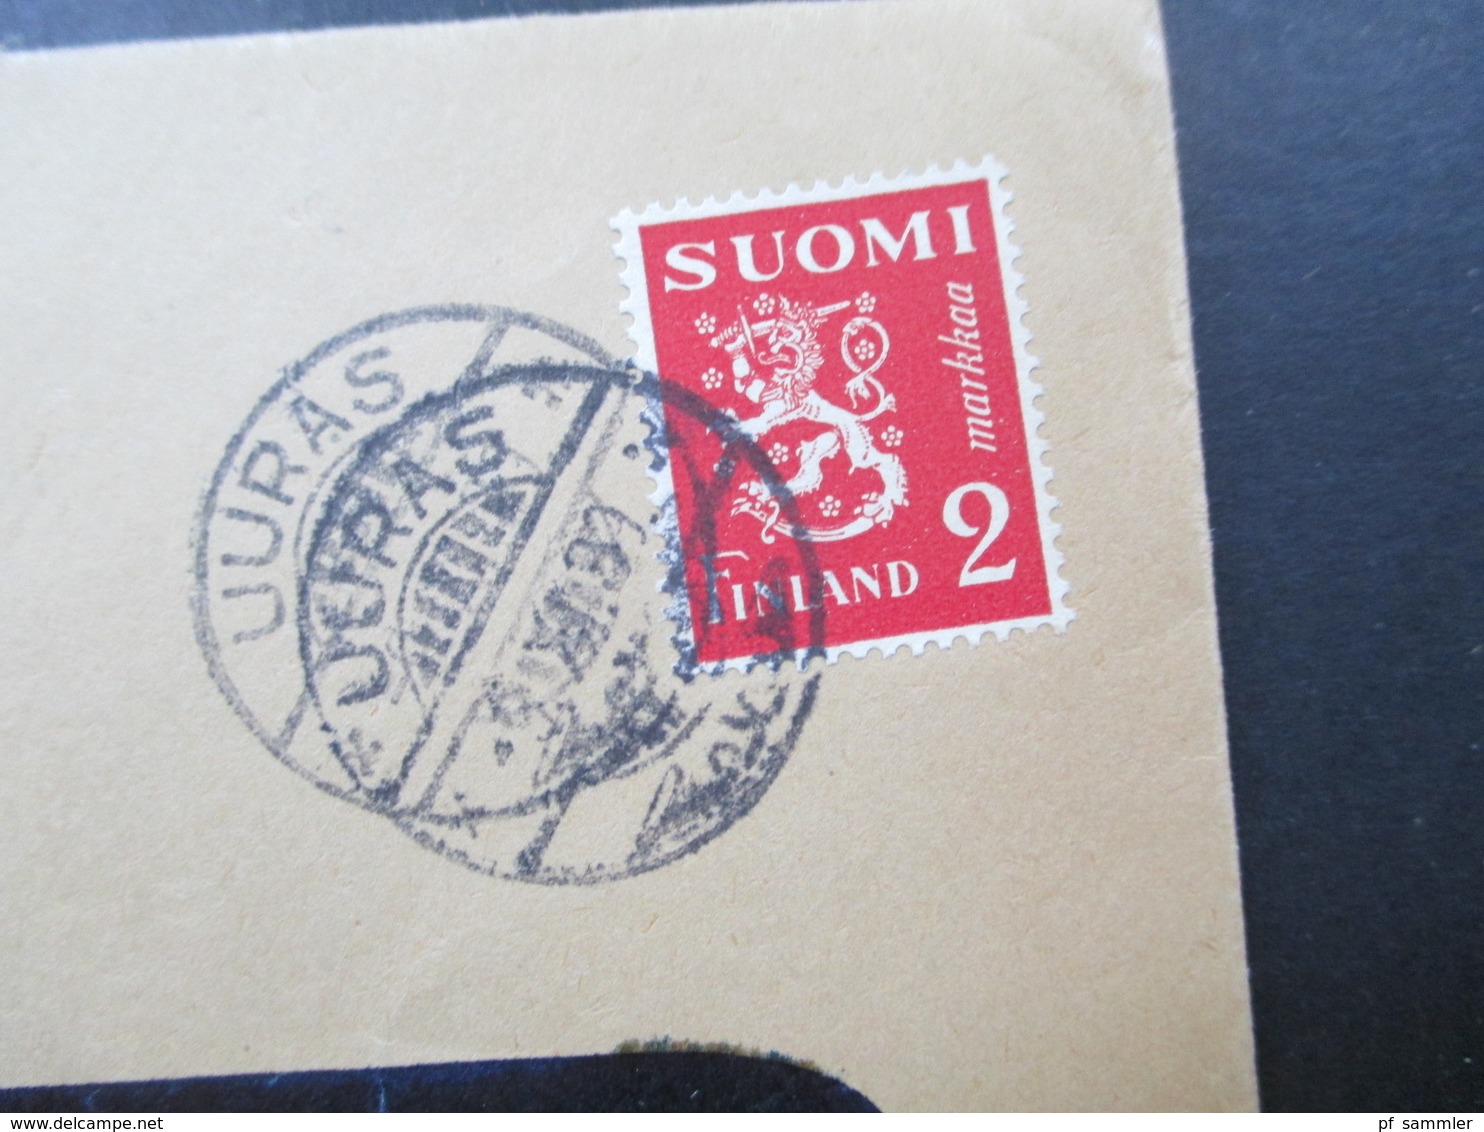 Finnland 1939 A.Ahlström Osakeyhtiö Uuras Trangsund Violetter Stempel Tarkastettu 20.1o.39 Ann. Asetuksen No 348 Nojalla - Covers & Documents